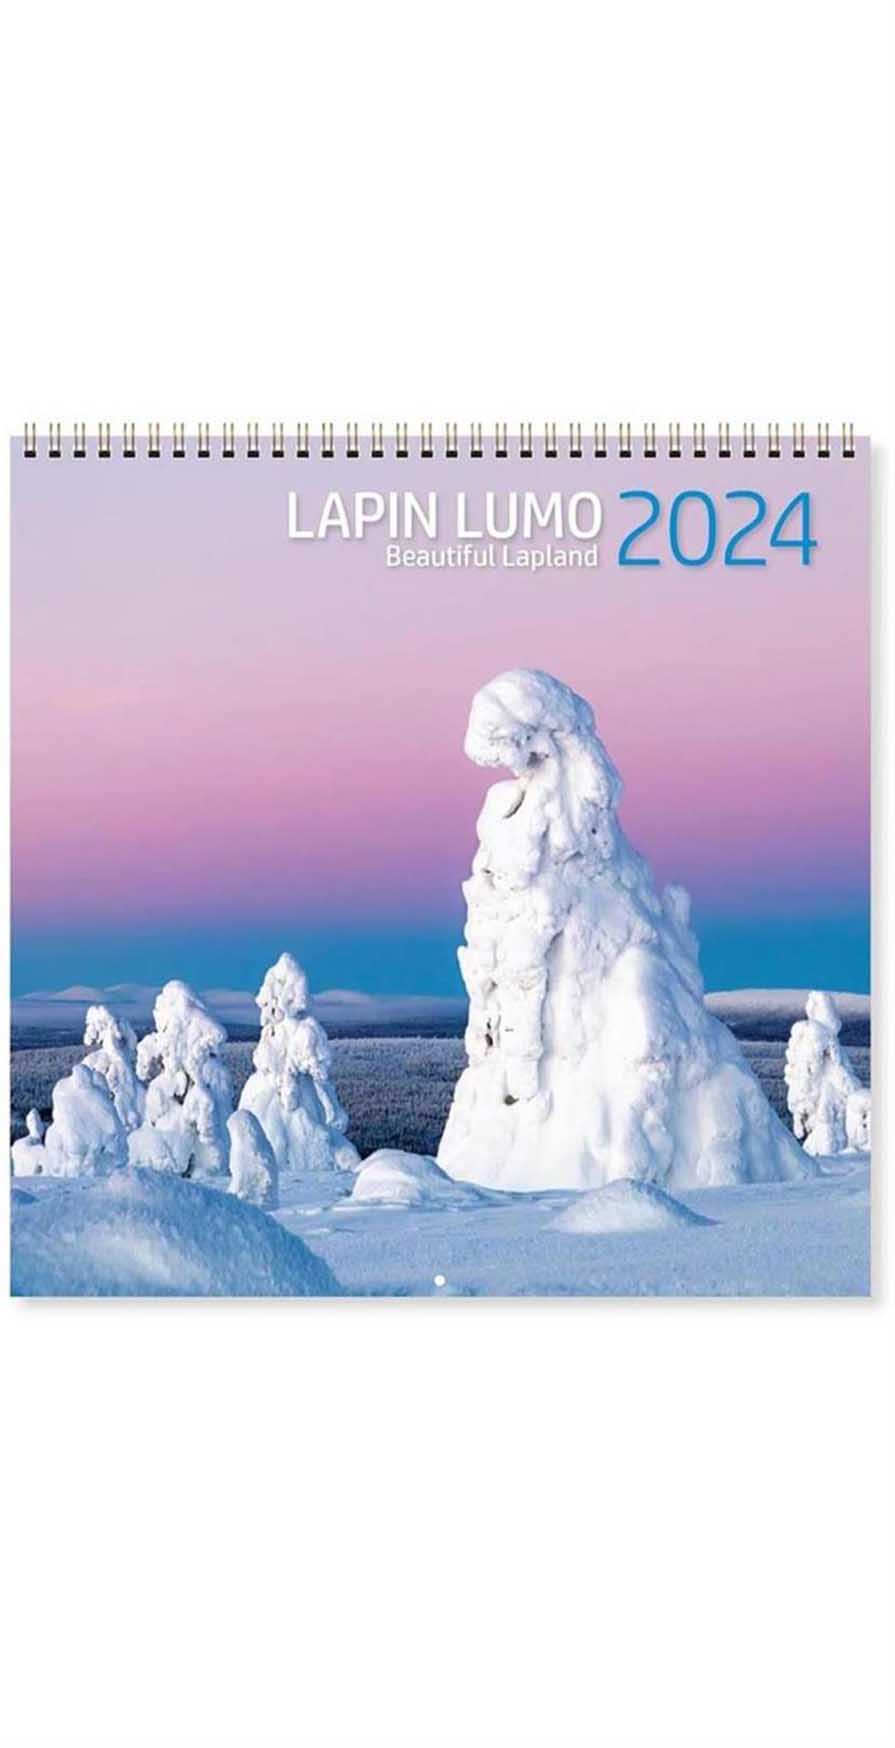 Seinäkalenteri 2024 Lapin lumo